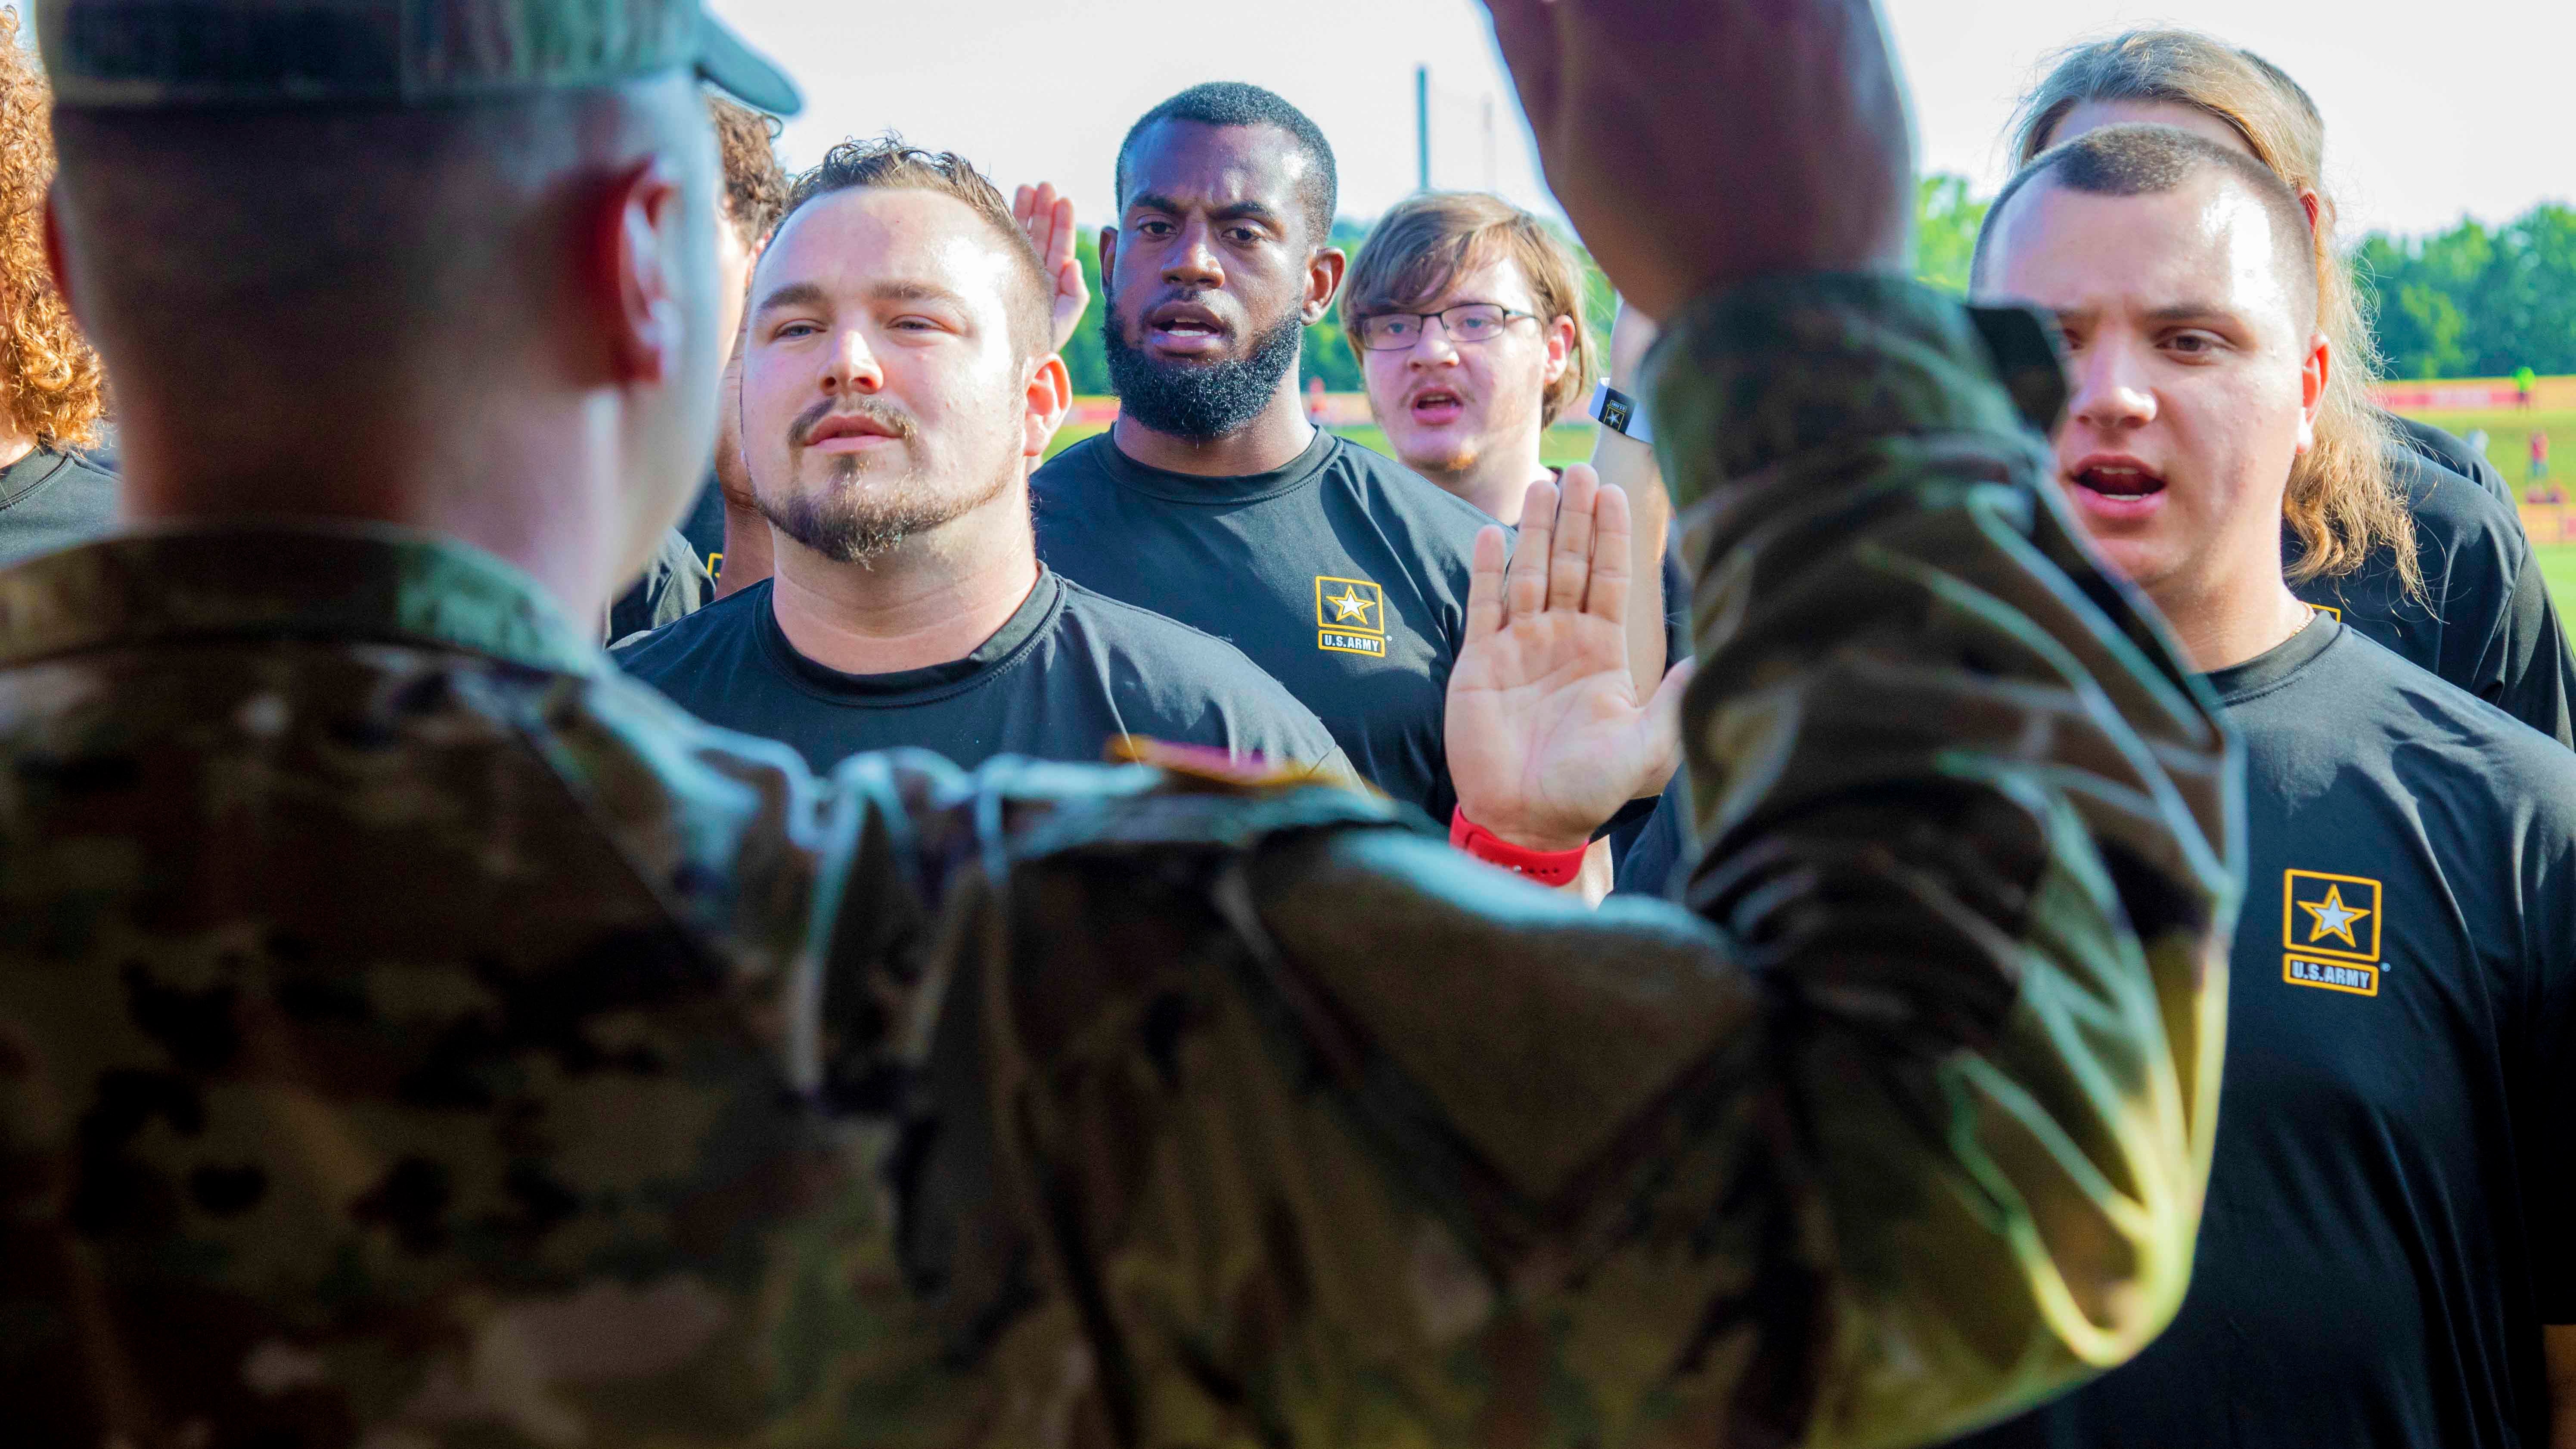 Recruits taking an oath